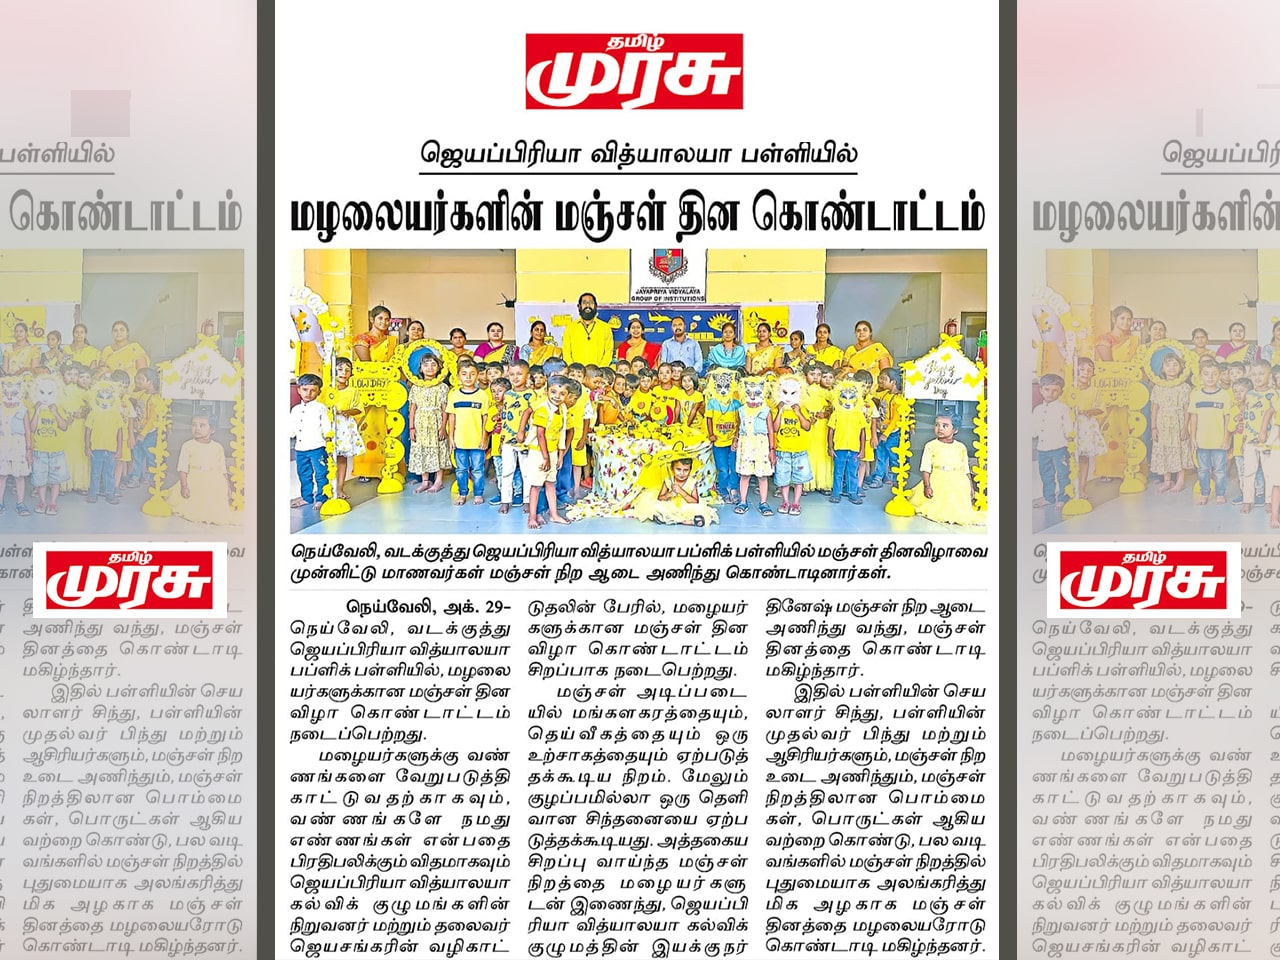 Thamizh Murasu - Kids at JPV celebrated Yellow Day with auspiciousness.